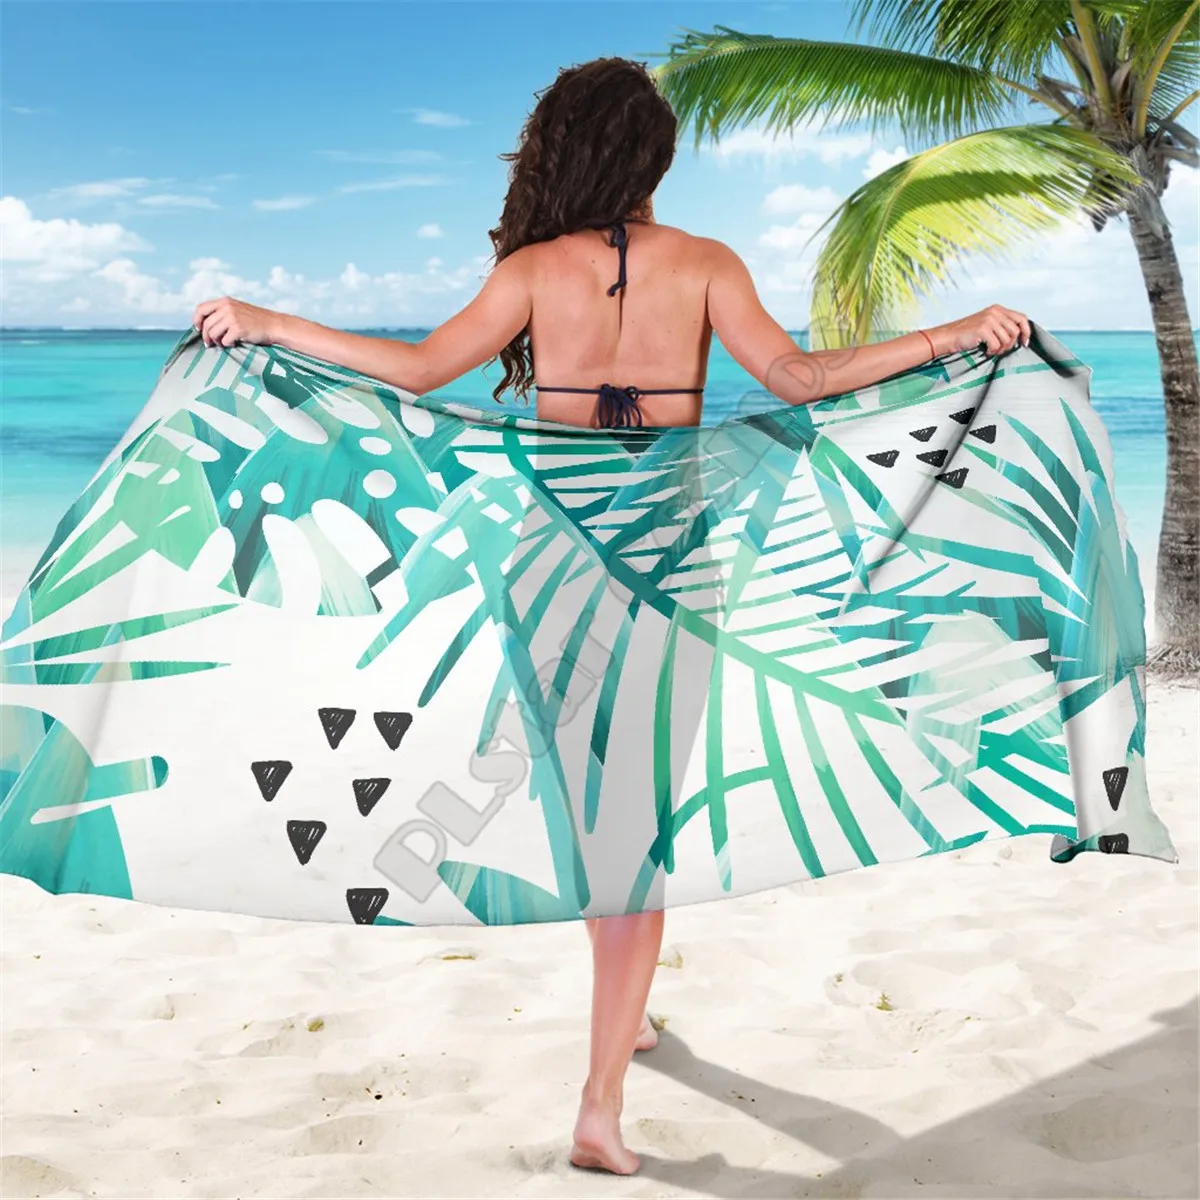 

Teal Green Leaves Sarong 3D printed Towel Summer Seaside resort Casual Bohemian style Beach Towel 02